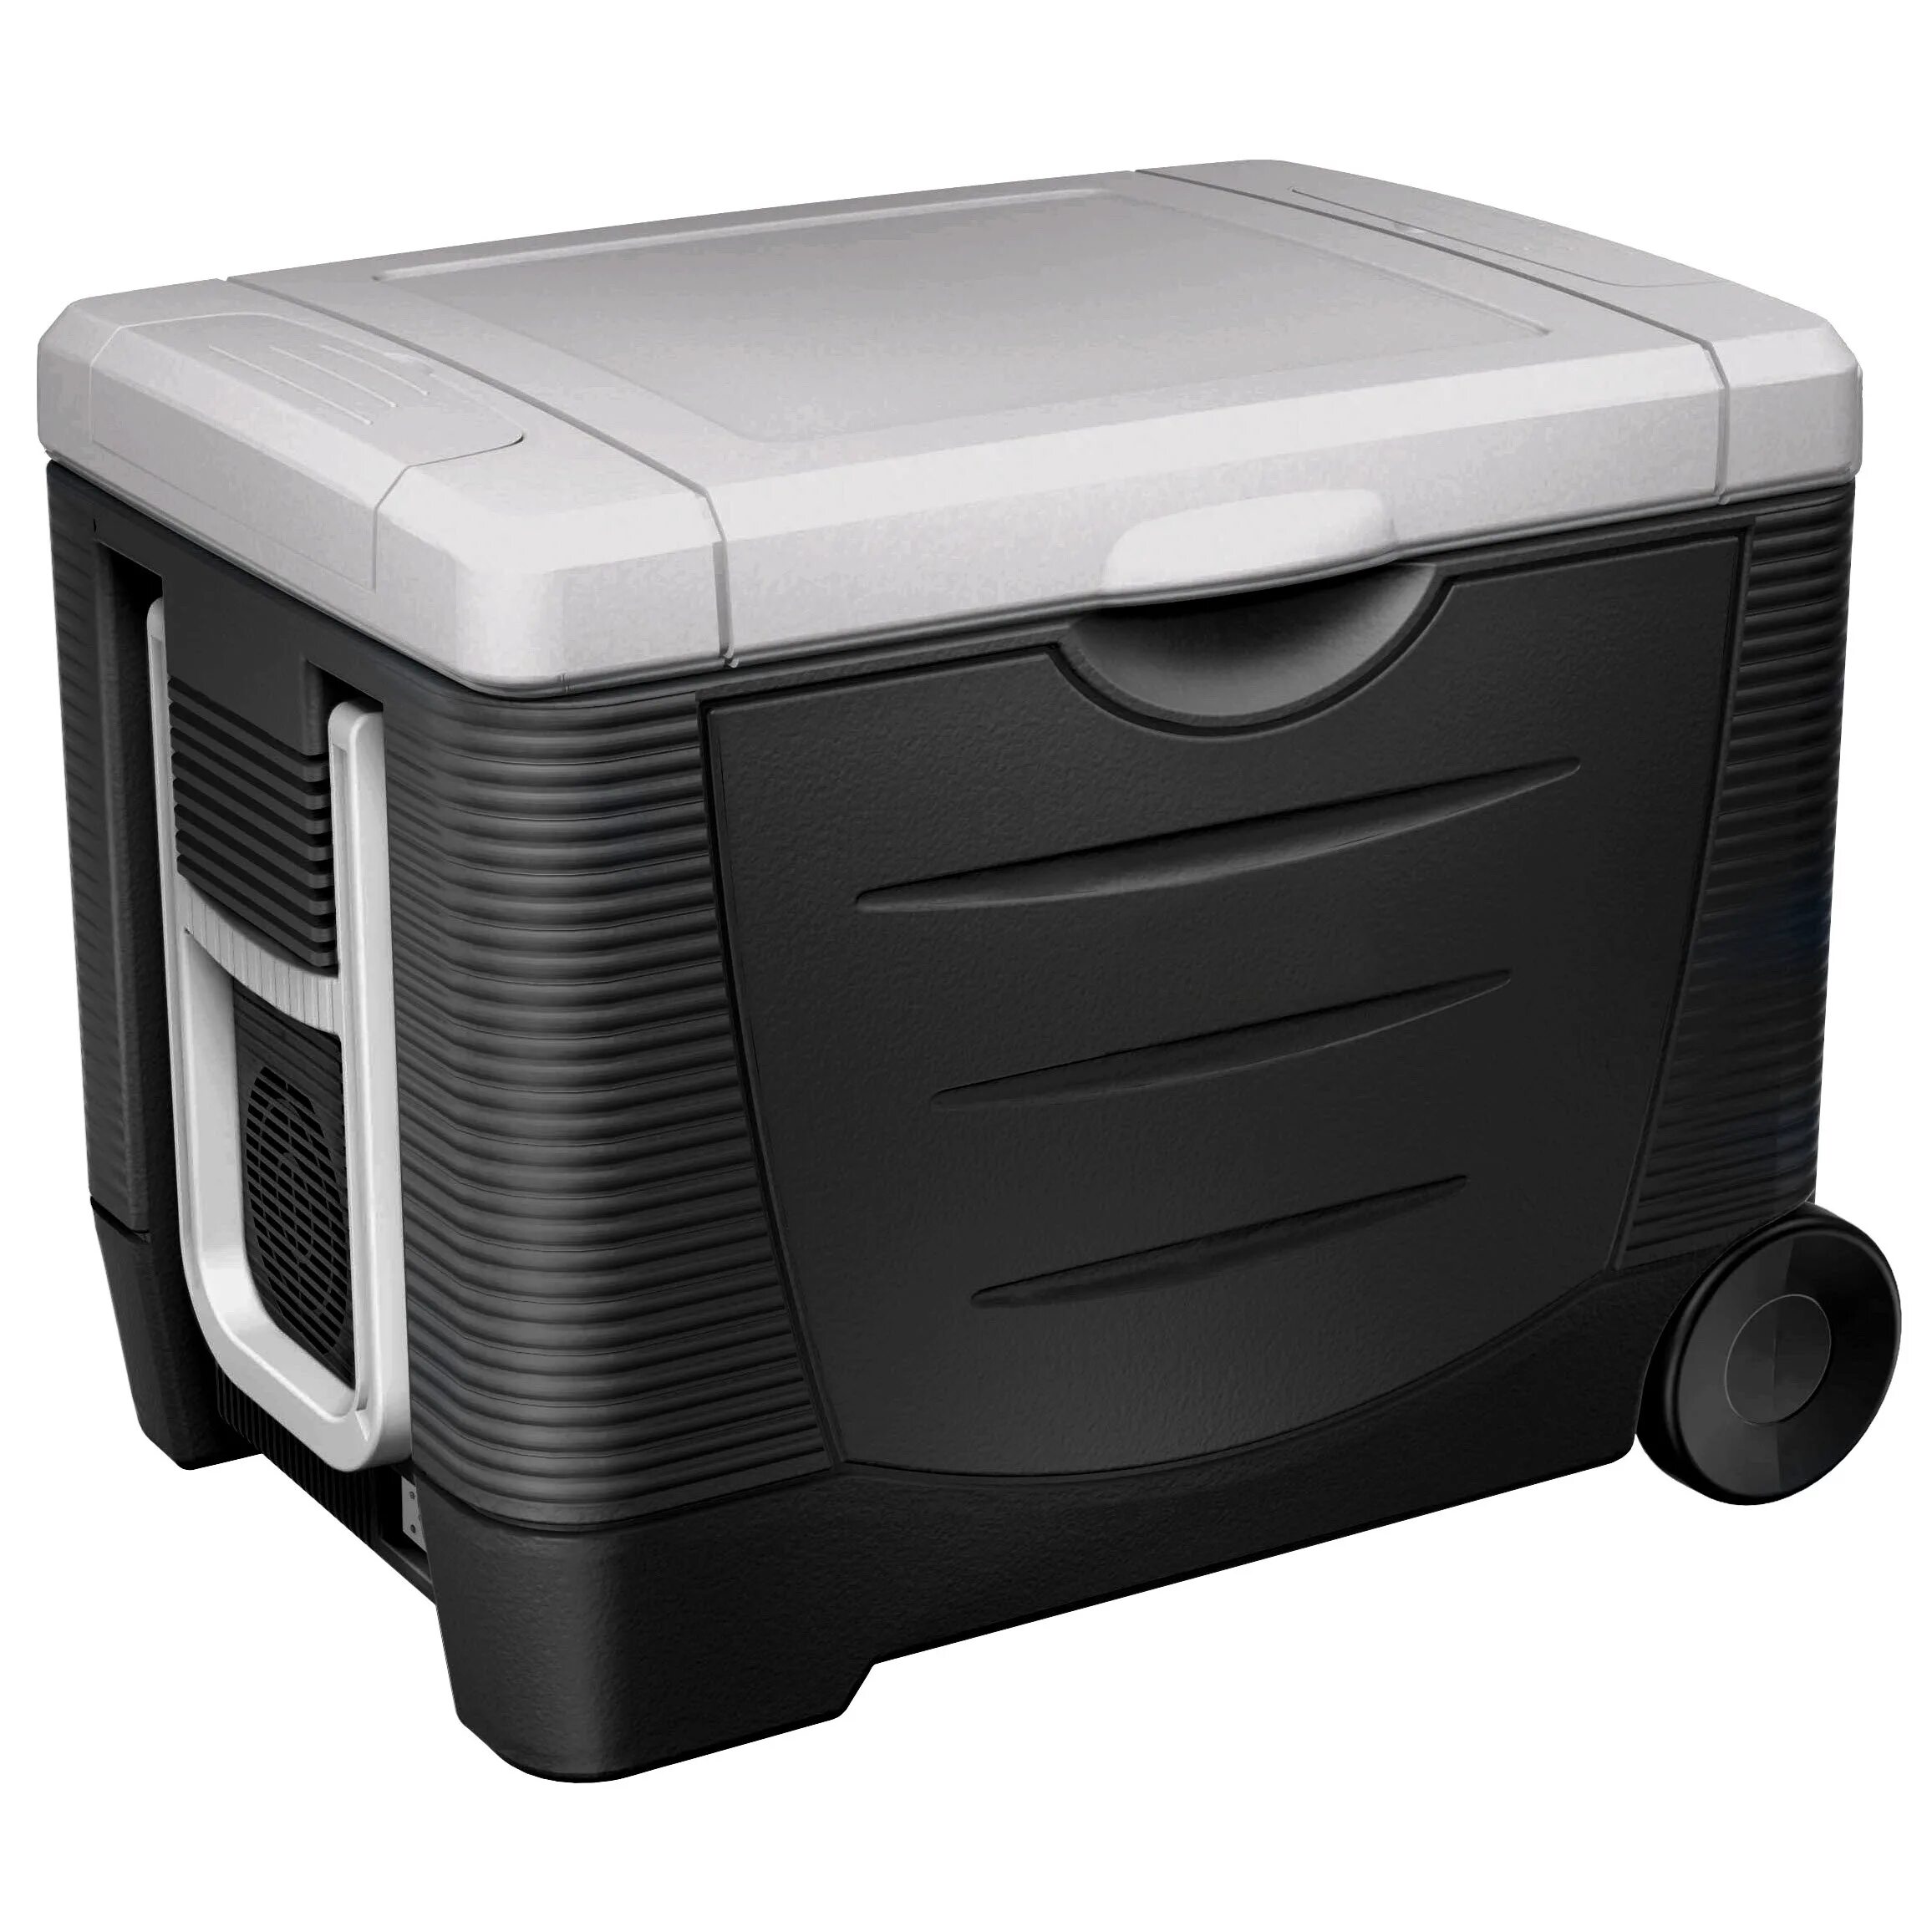 Thermoelectric Cooler автохолодильник. Thermoelectric Cooler Warmer автохолодильник. Автохолодильник Sunwind EF-30220. Термоэлектрический холодильник CF-0835 B.